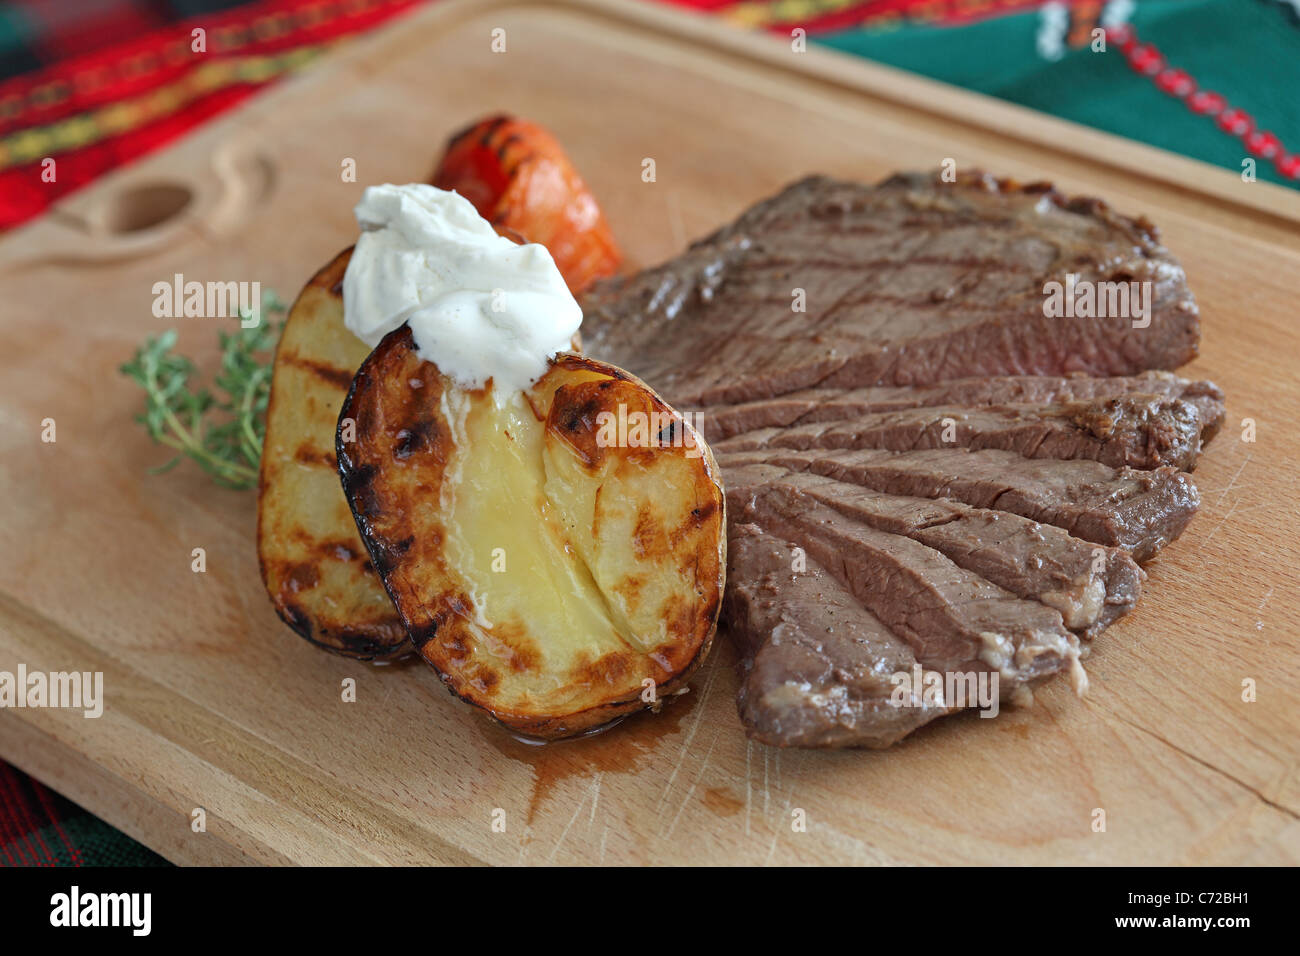 flank steak with baked potato Stock Photo